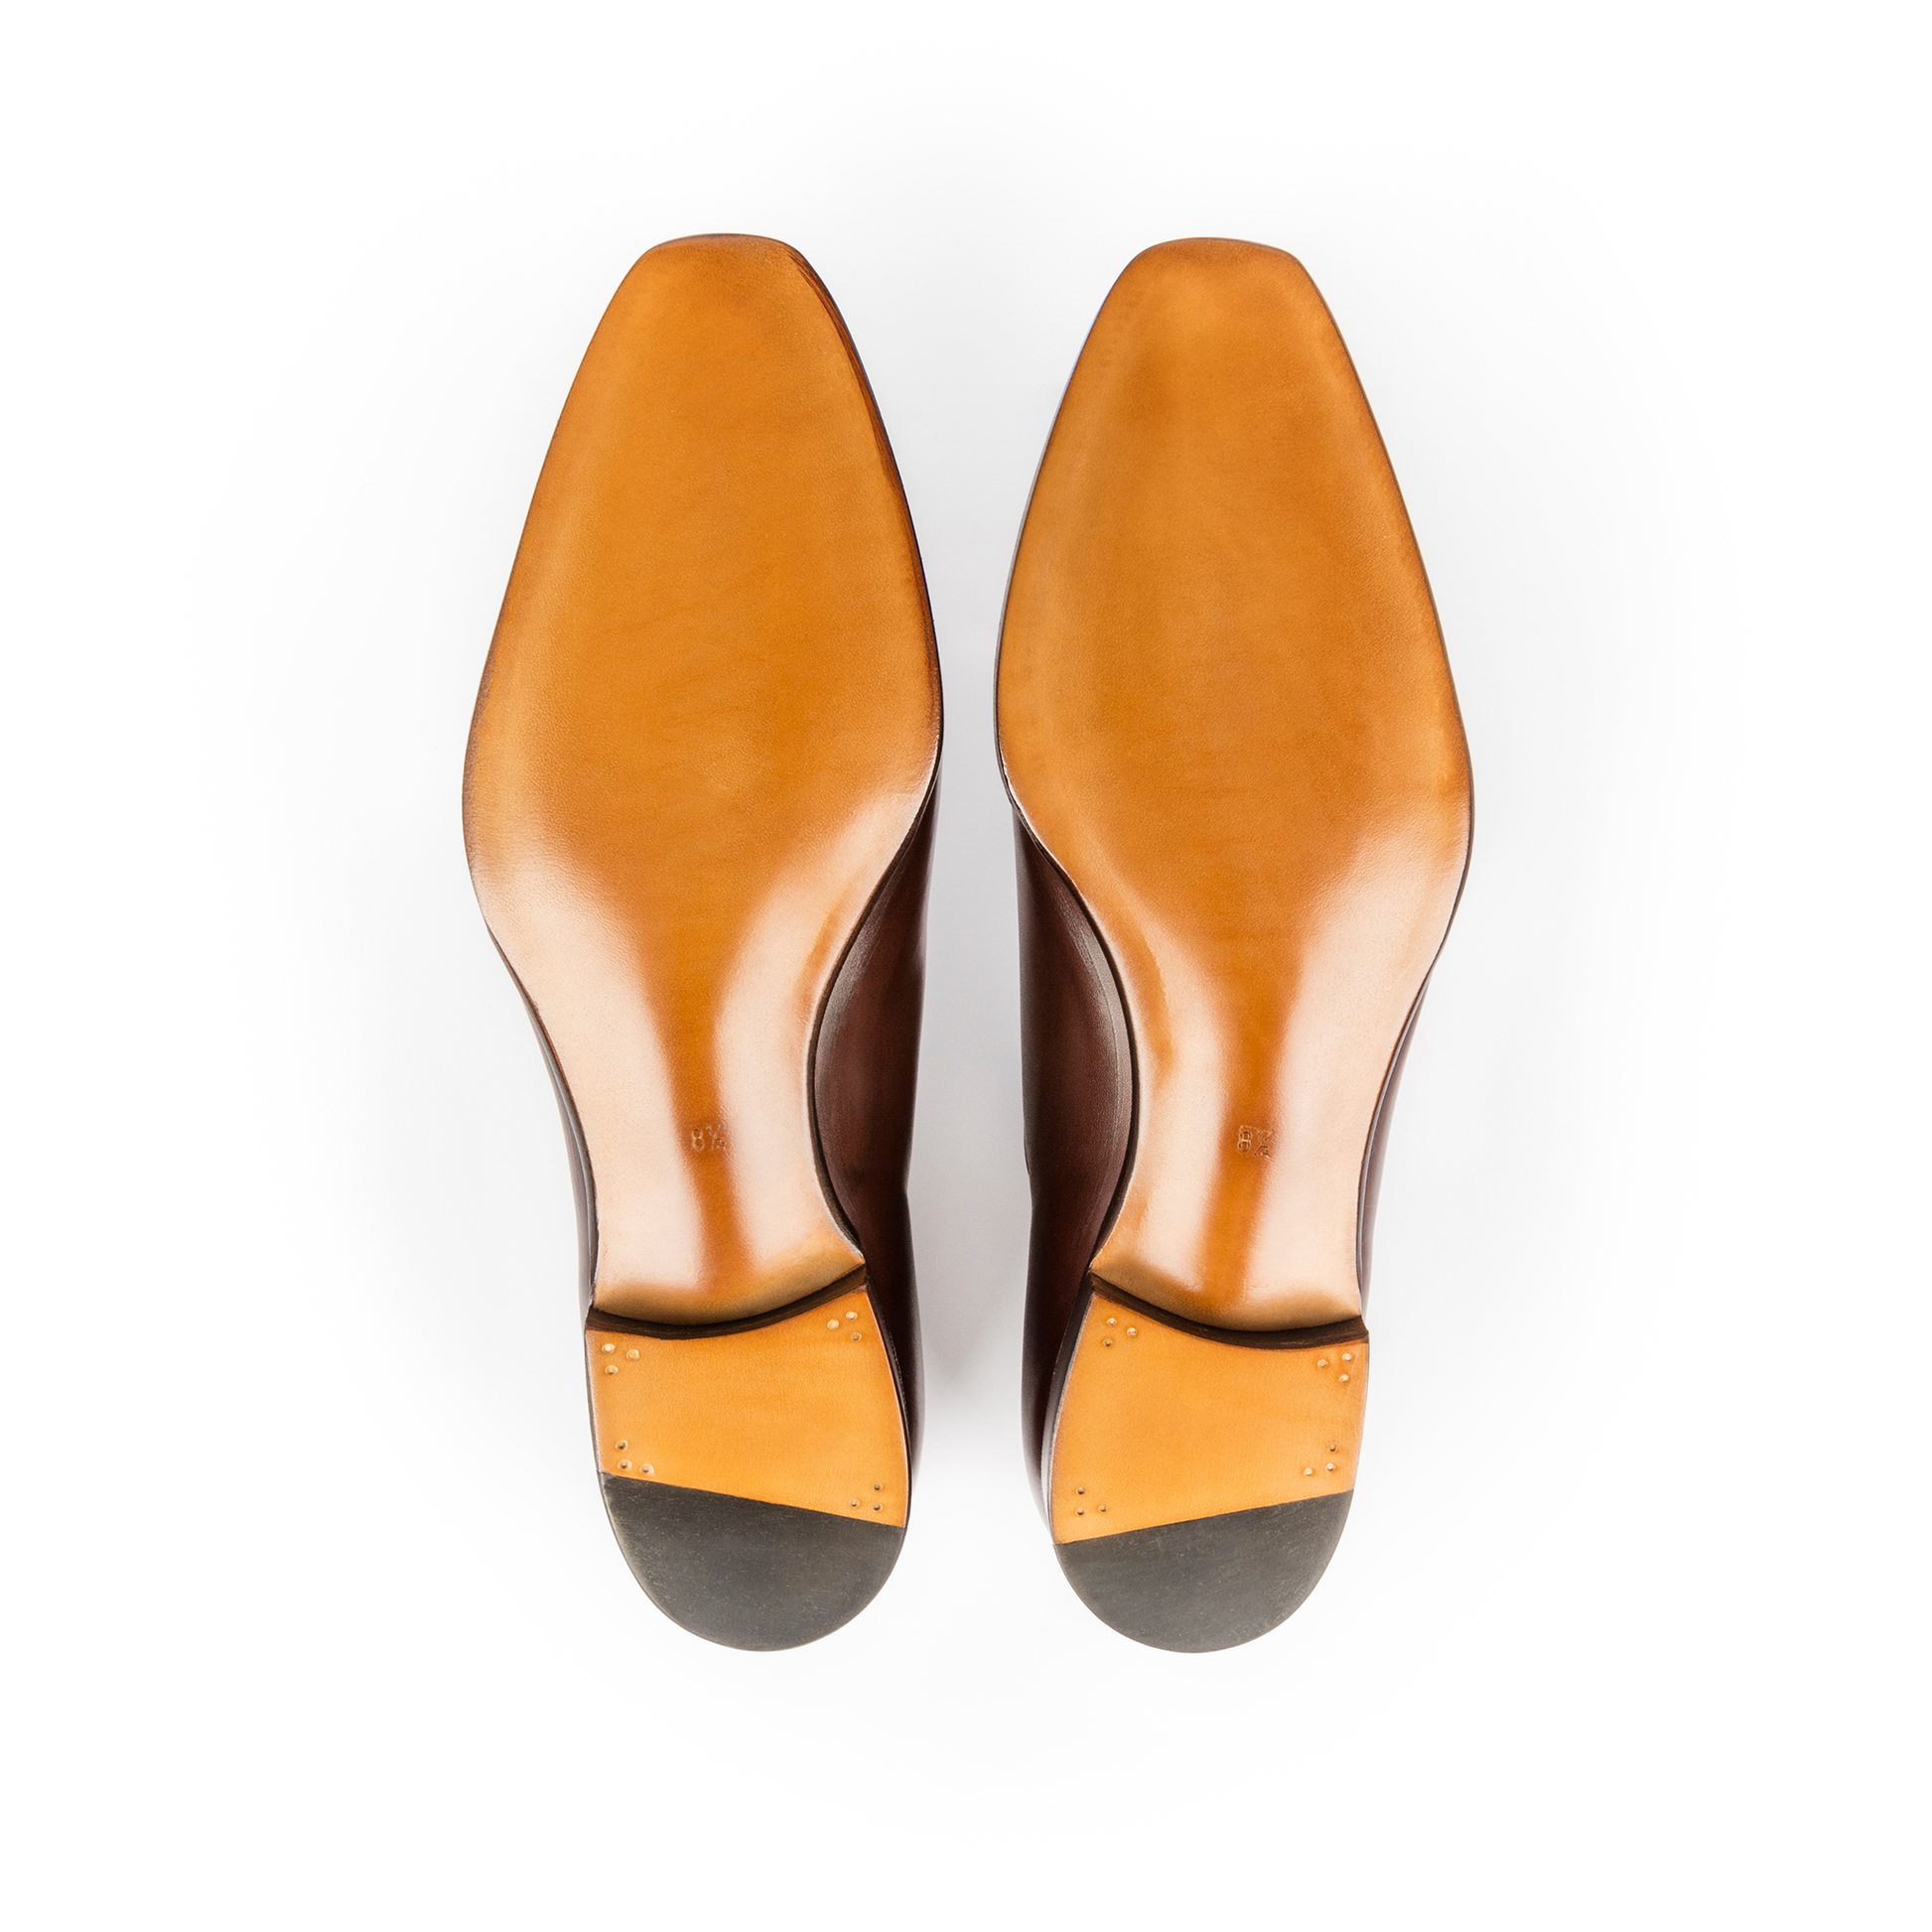 TLB Mallorca leather shoes 113 / GOYA / VEGANO BROWN